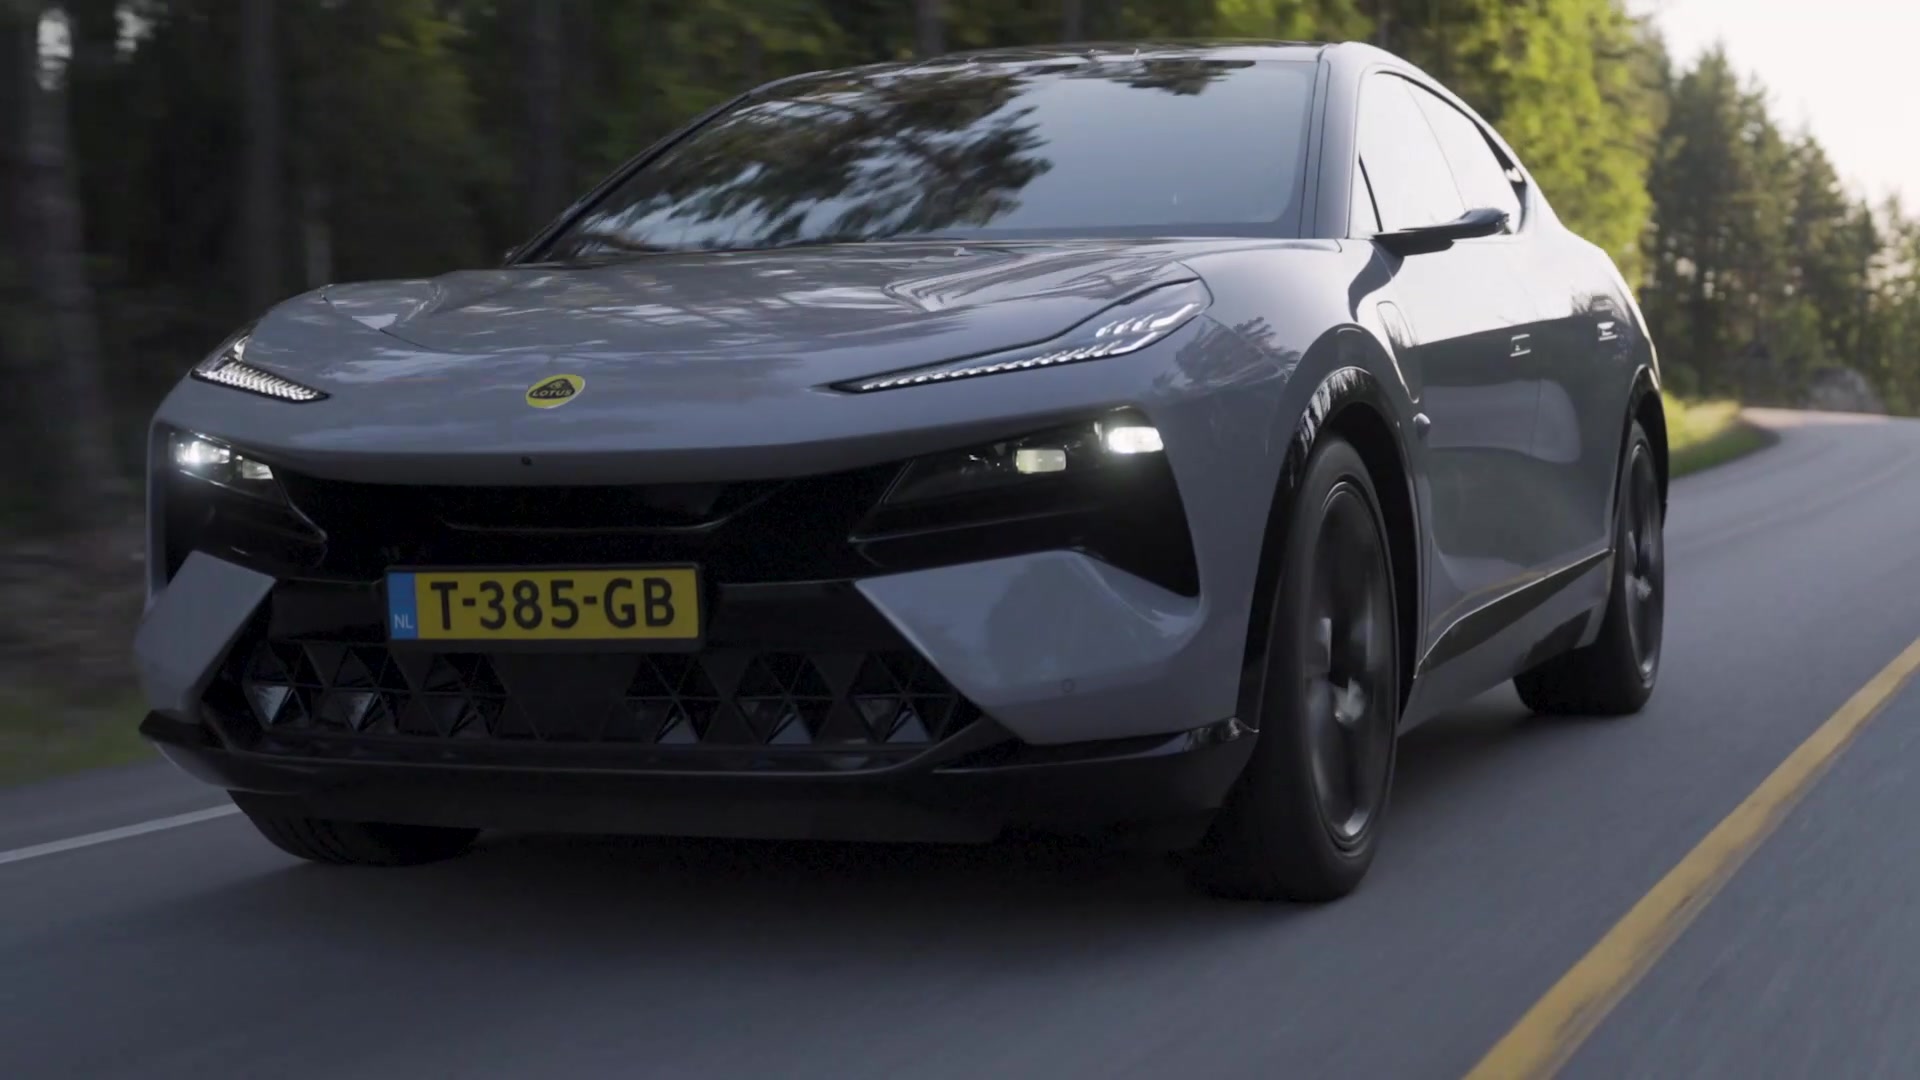 Lotus Eletre S in Kaimu Grey Driving Video